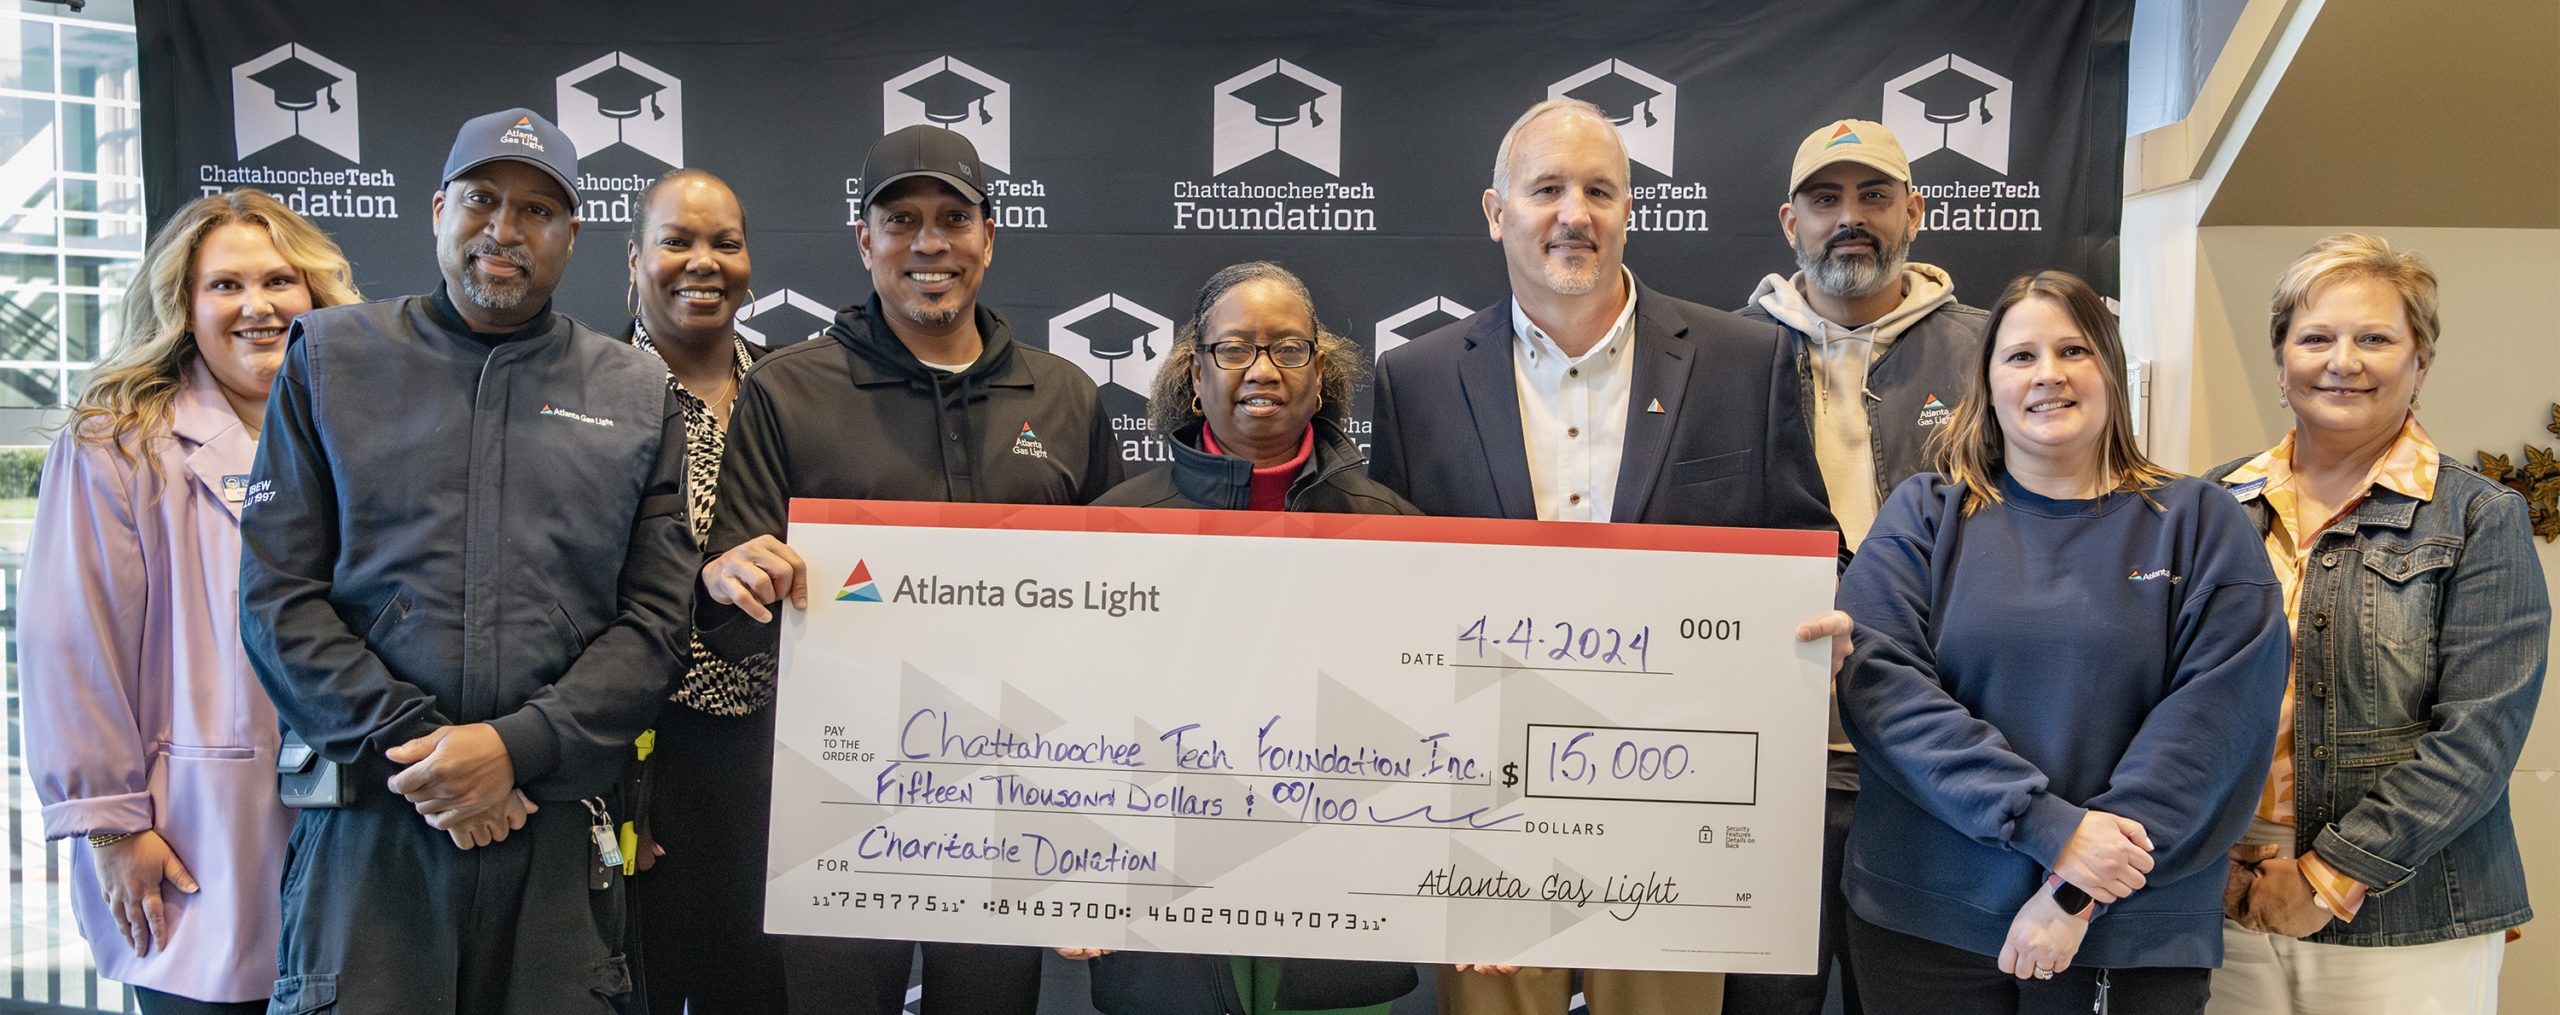 Atlanta Gas Light presents $15,000 donation to the Chattahoochee Tech Foundation